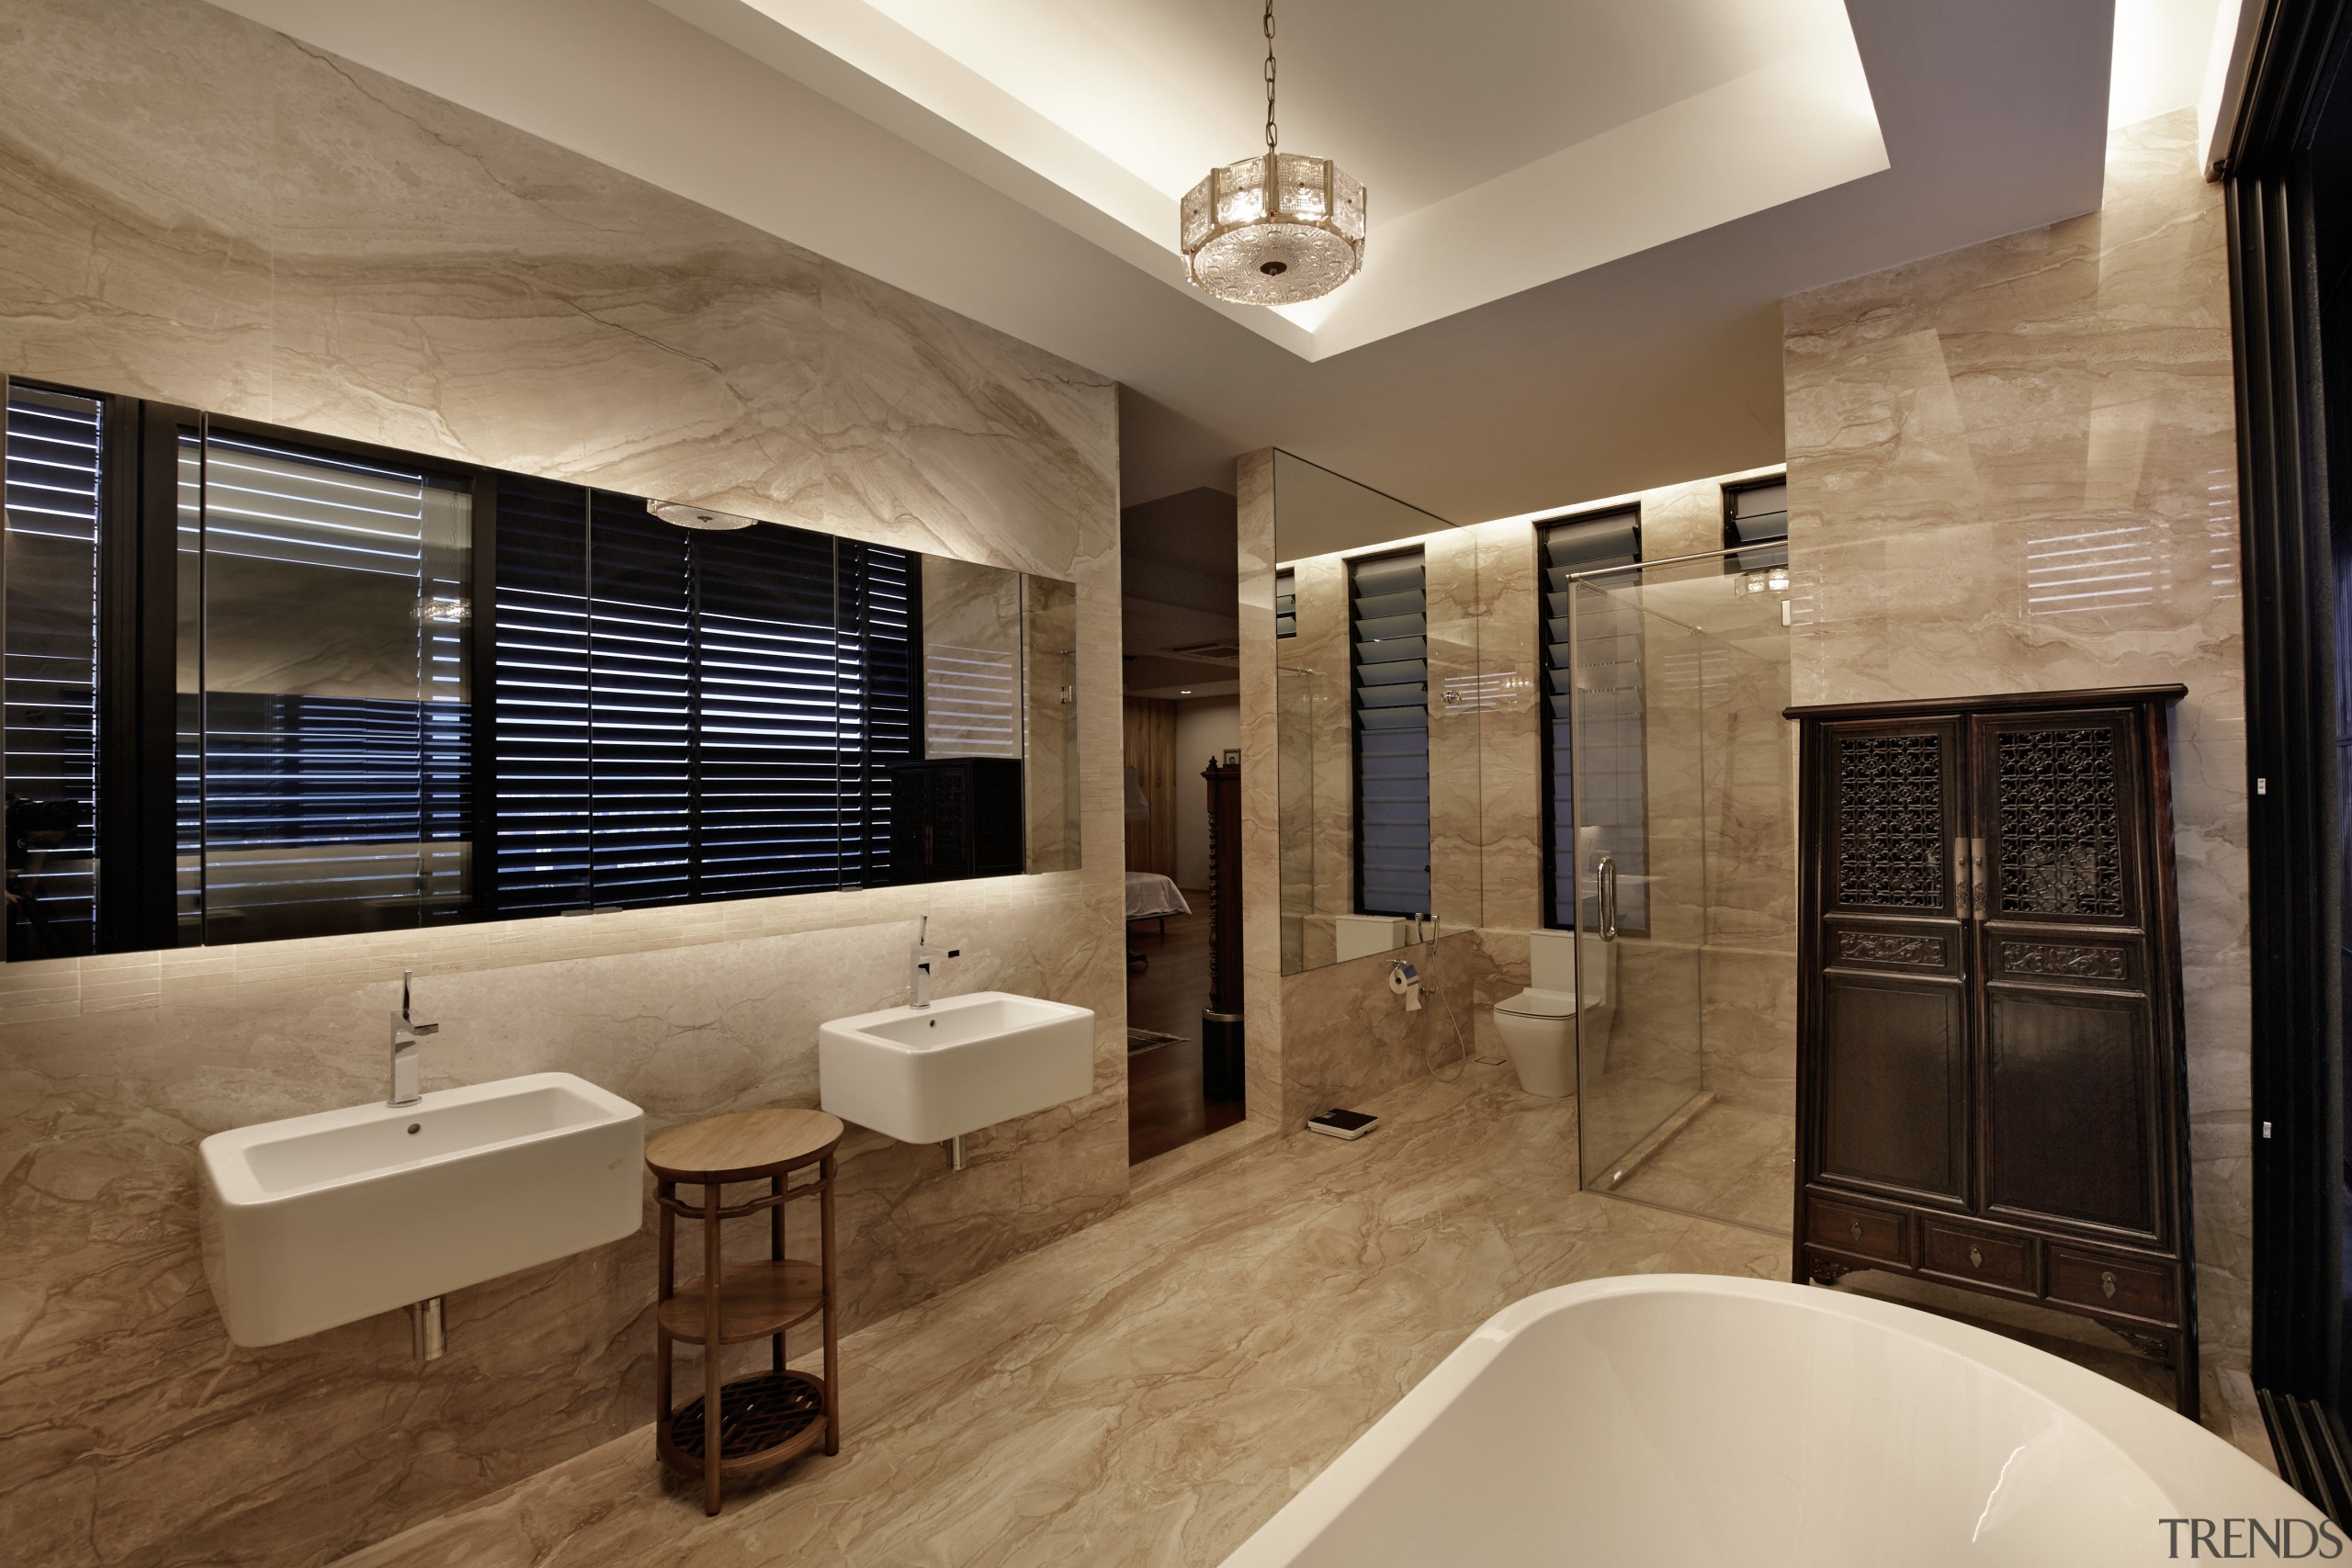 This master bathroom has the look of a architecture, bathroom, estate, home, interior design, real estate, room, brown, orange